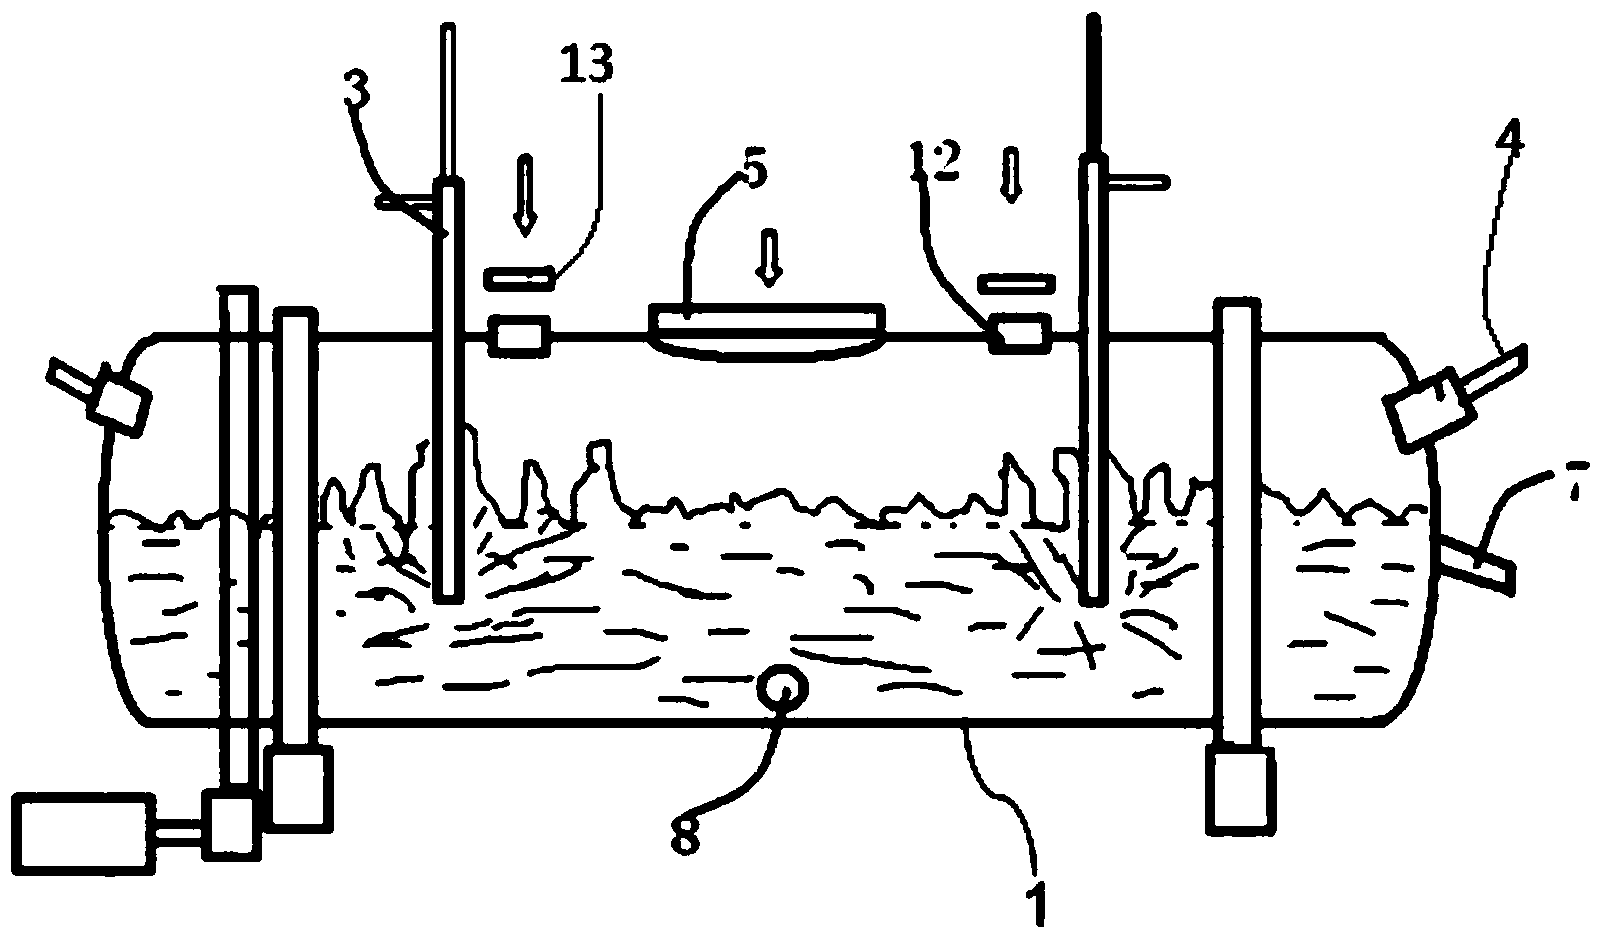 Smelting process of low-grade scrap copper